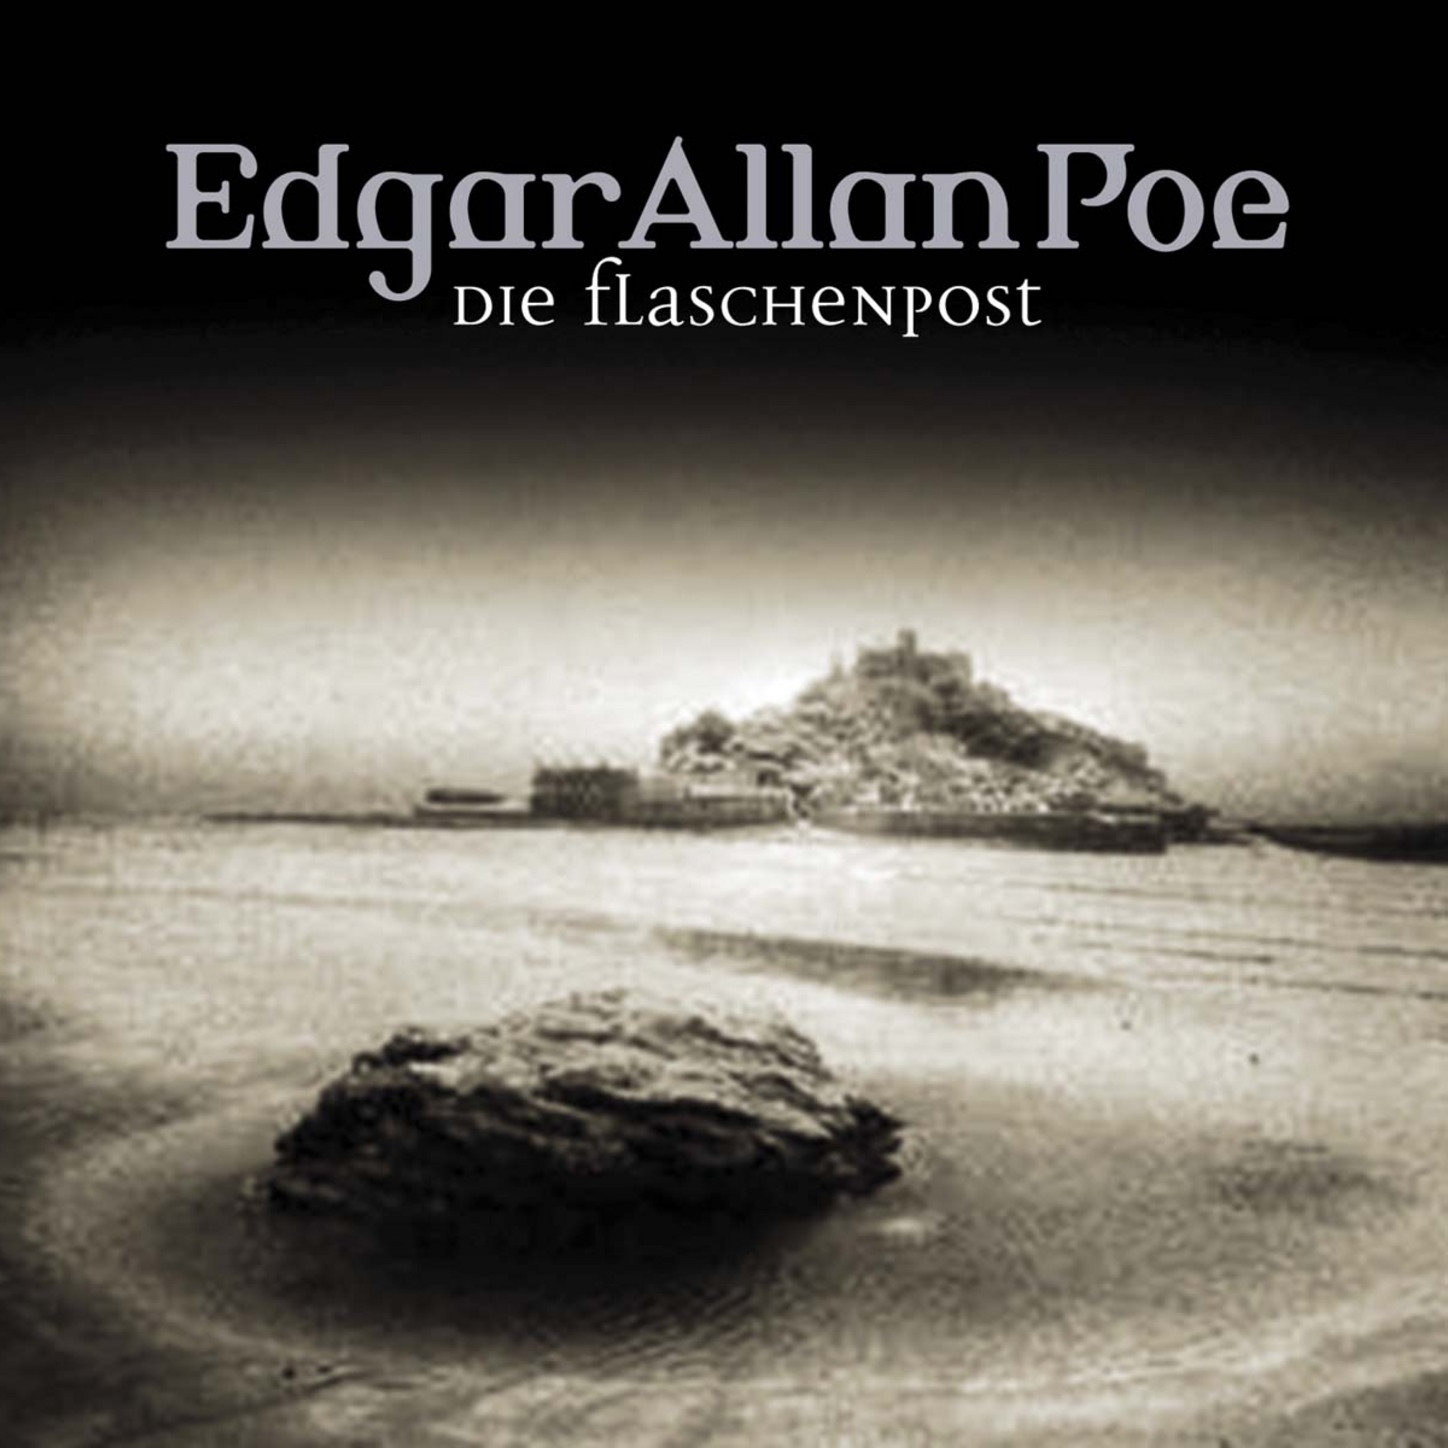 Скачать Edgar Allan Poe, Folge 26: Die Flaschenpost - Эдгар Аллан По